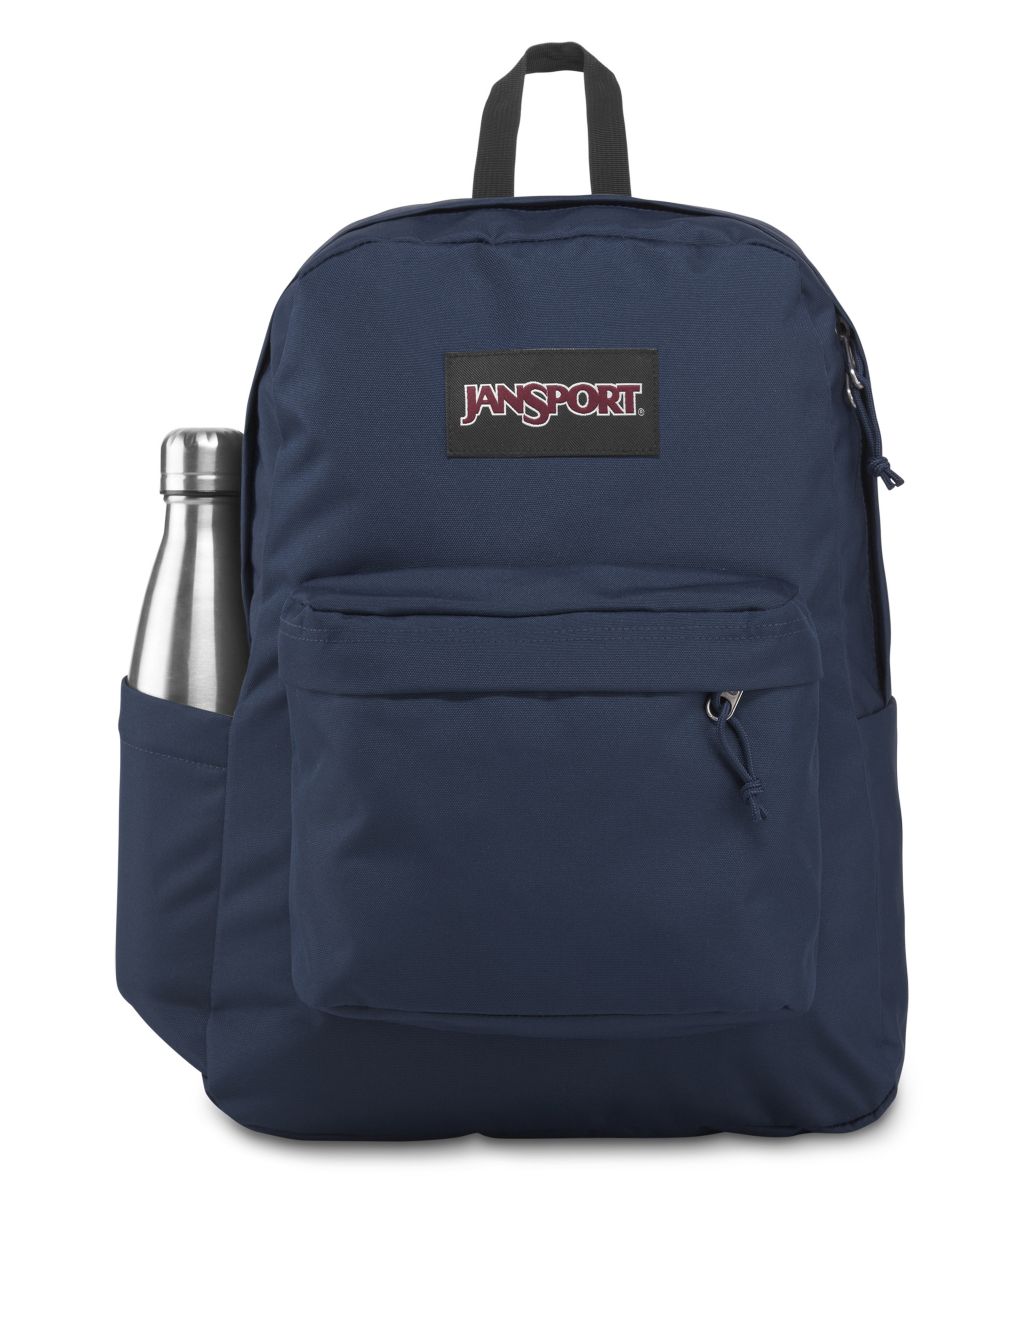 SuperBreak Plus Backpack image 4